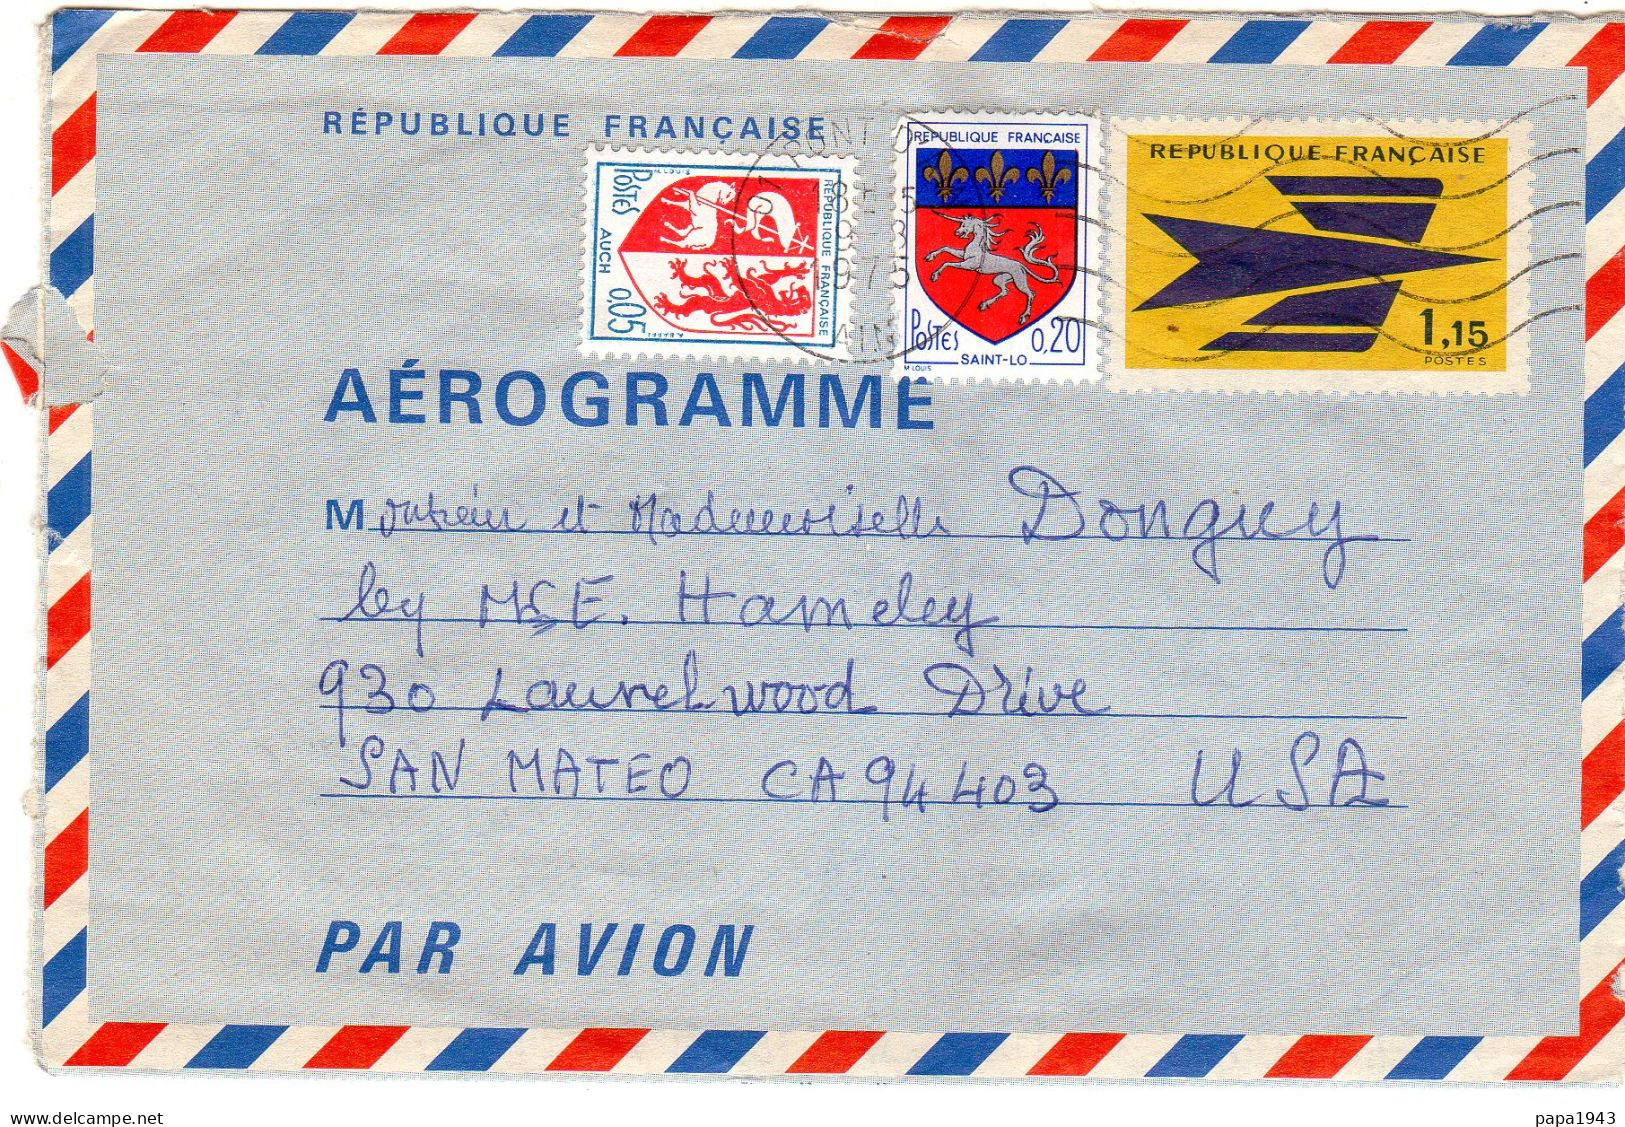 1975  AEROGRAMME  Timbres  Blasons Auch 0,05 + St LO 0,20 + 1,15 Envoyée à SAN MATEO U S A - Aerograms